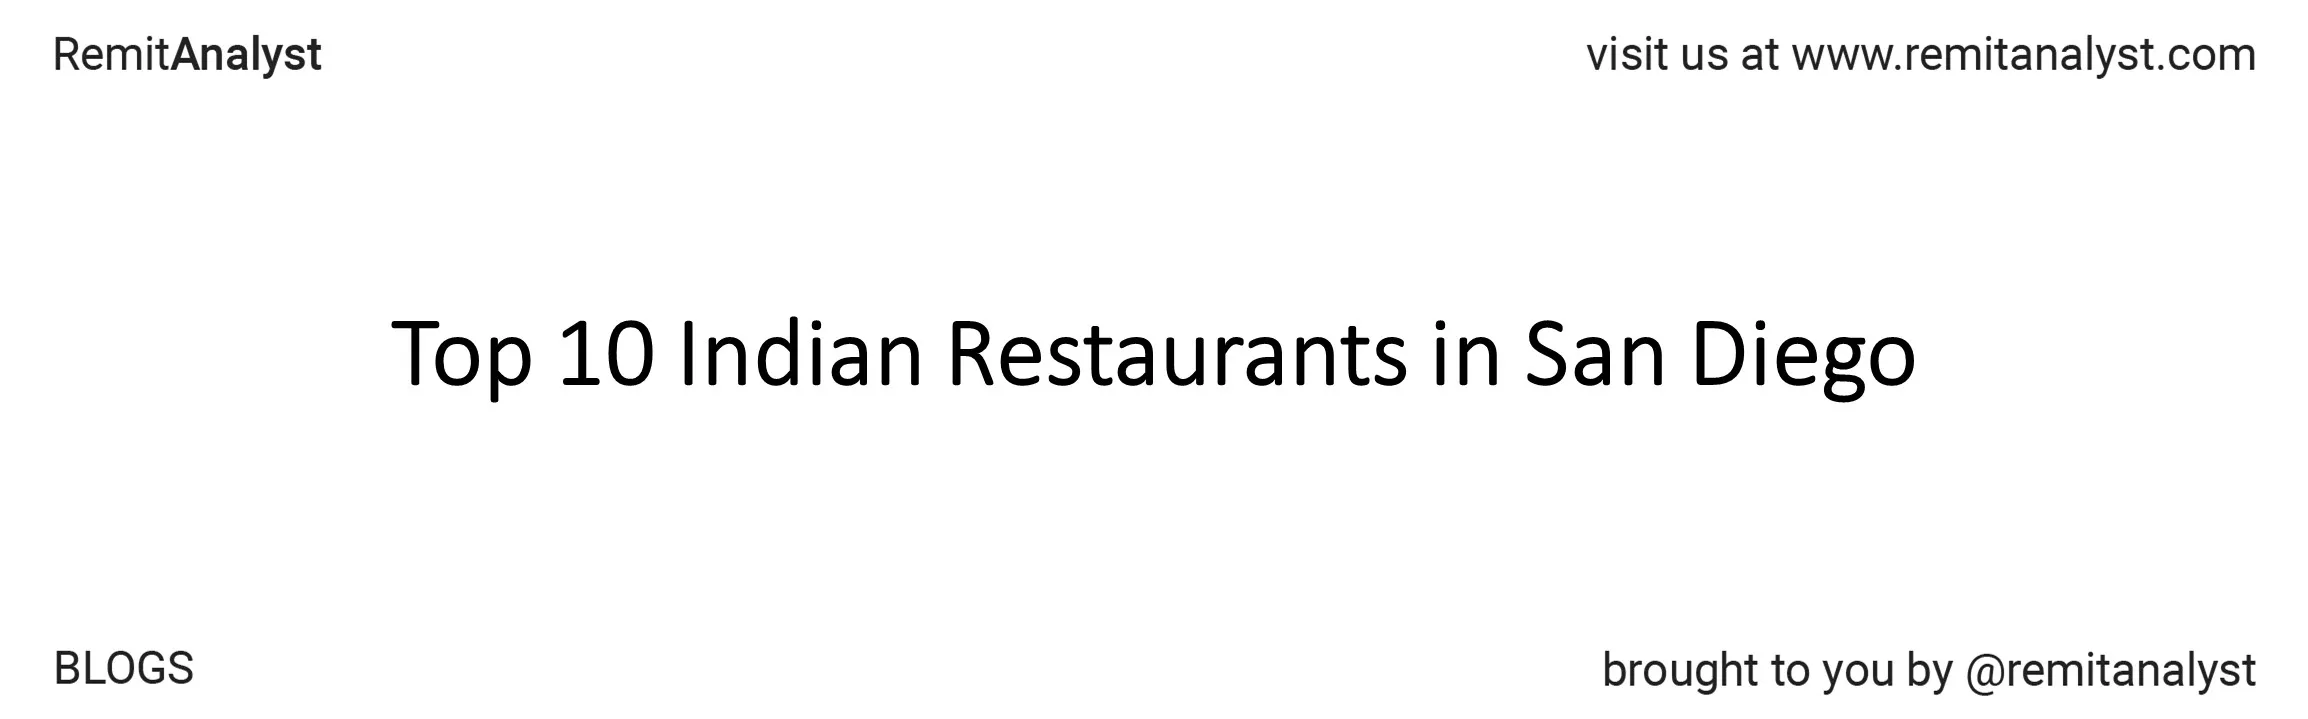 famous-indian-restaurants-san-diego-title